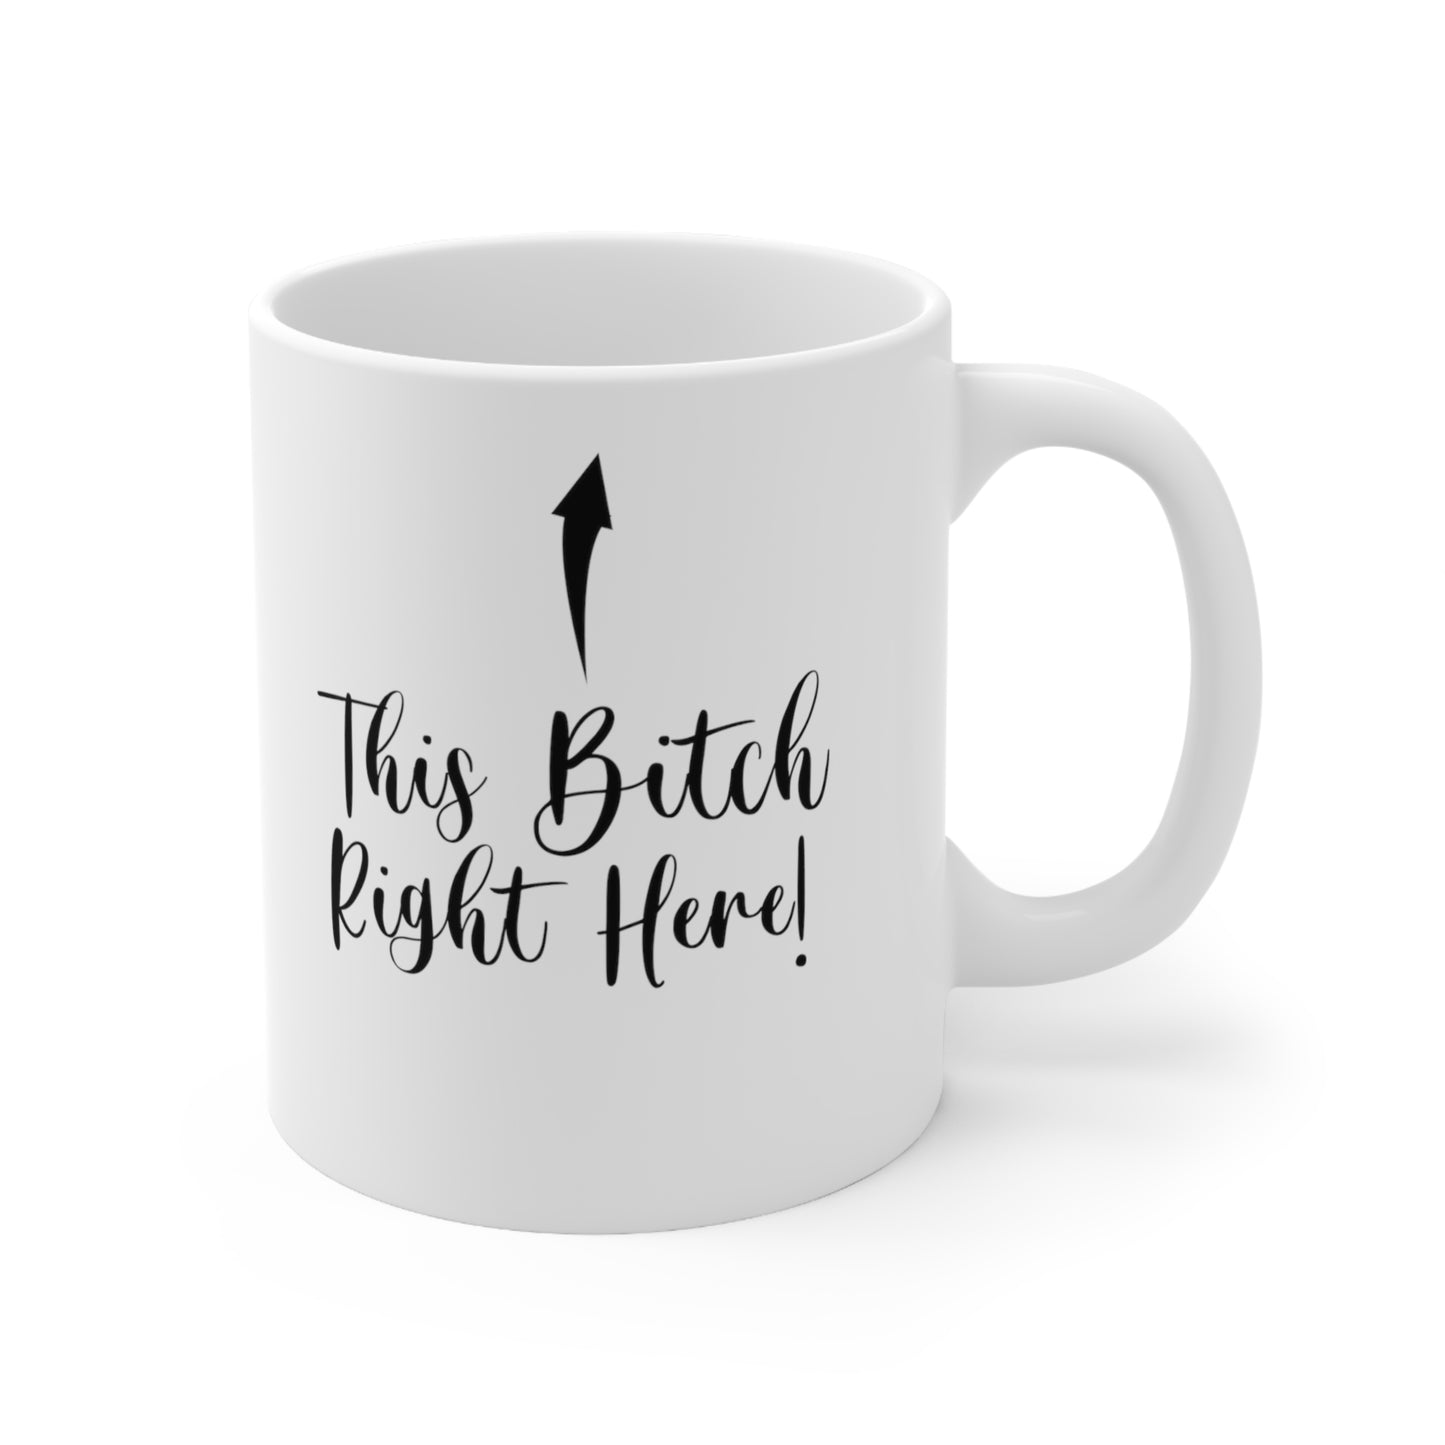 This Bitch Right Here! Humorous Coffee Mug!